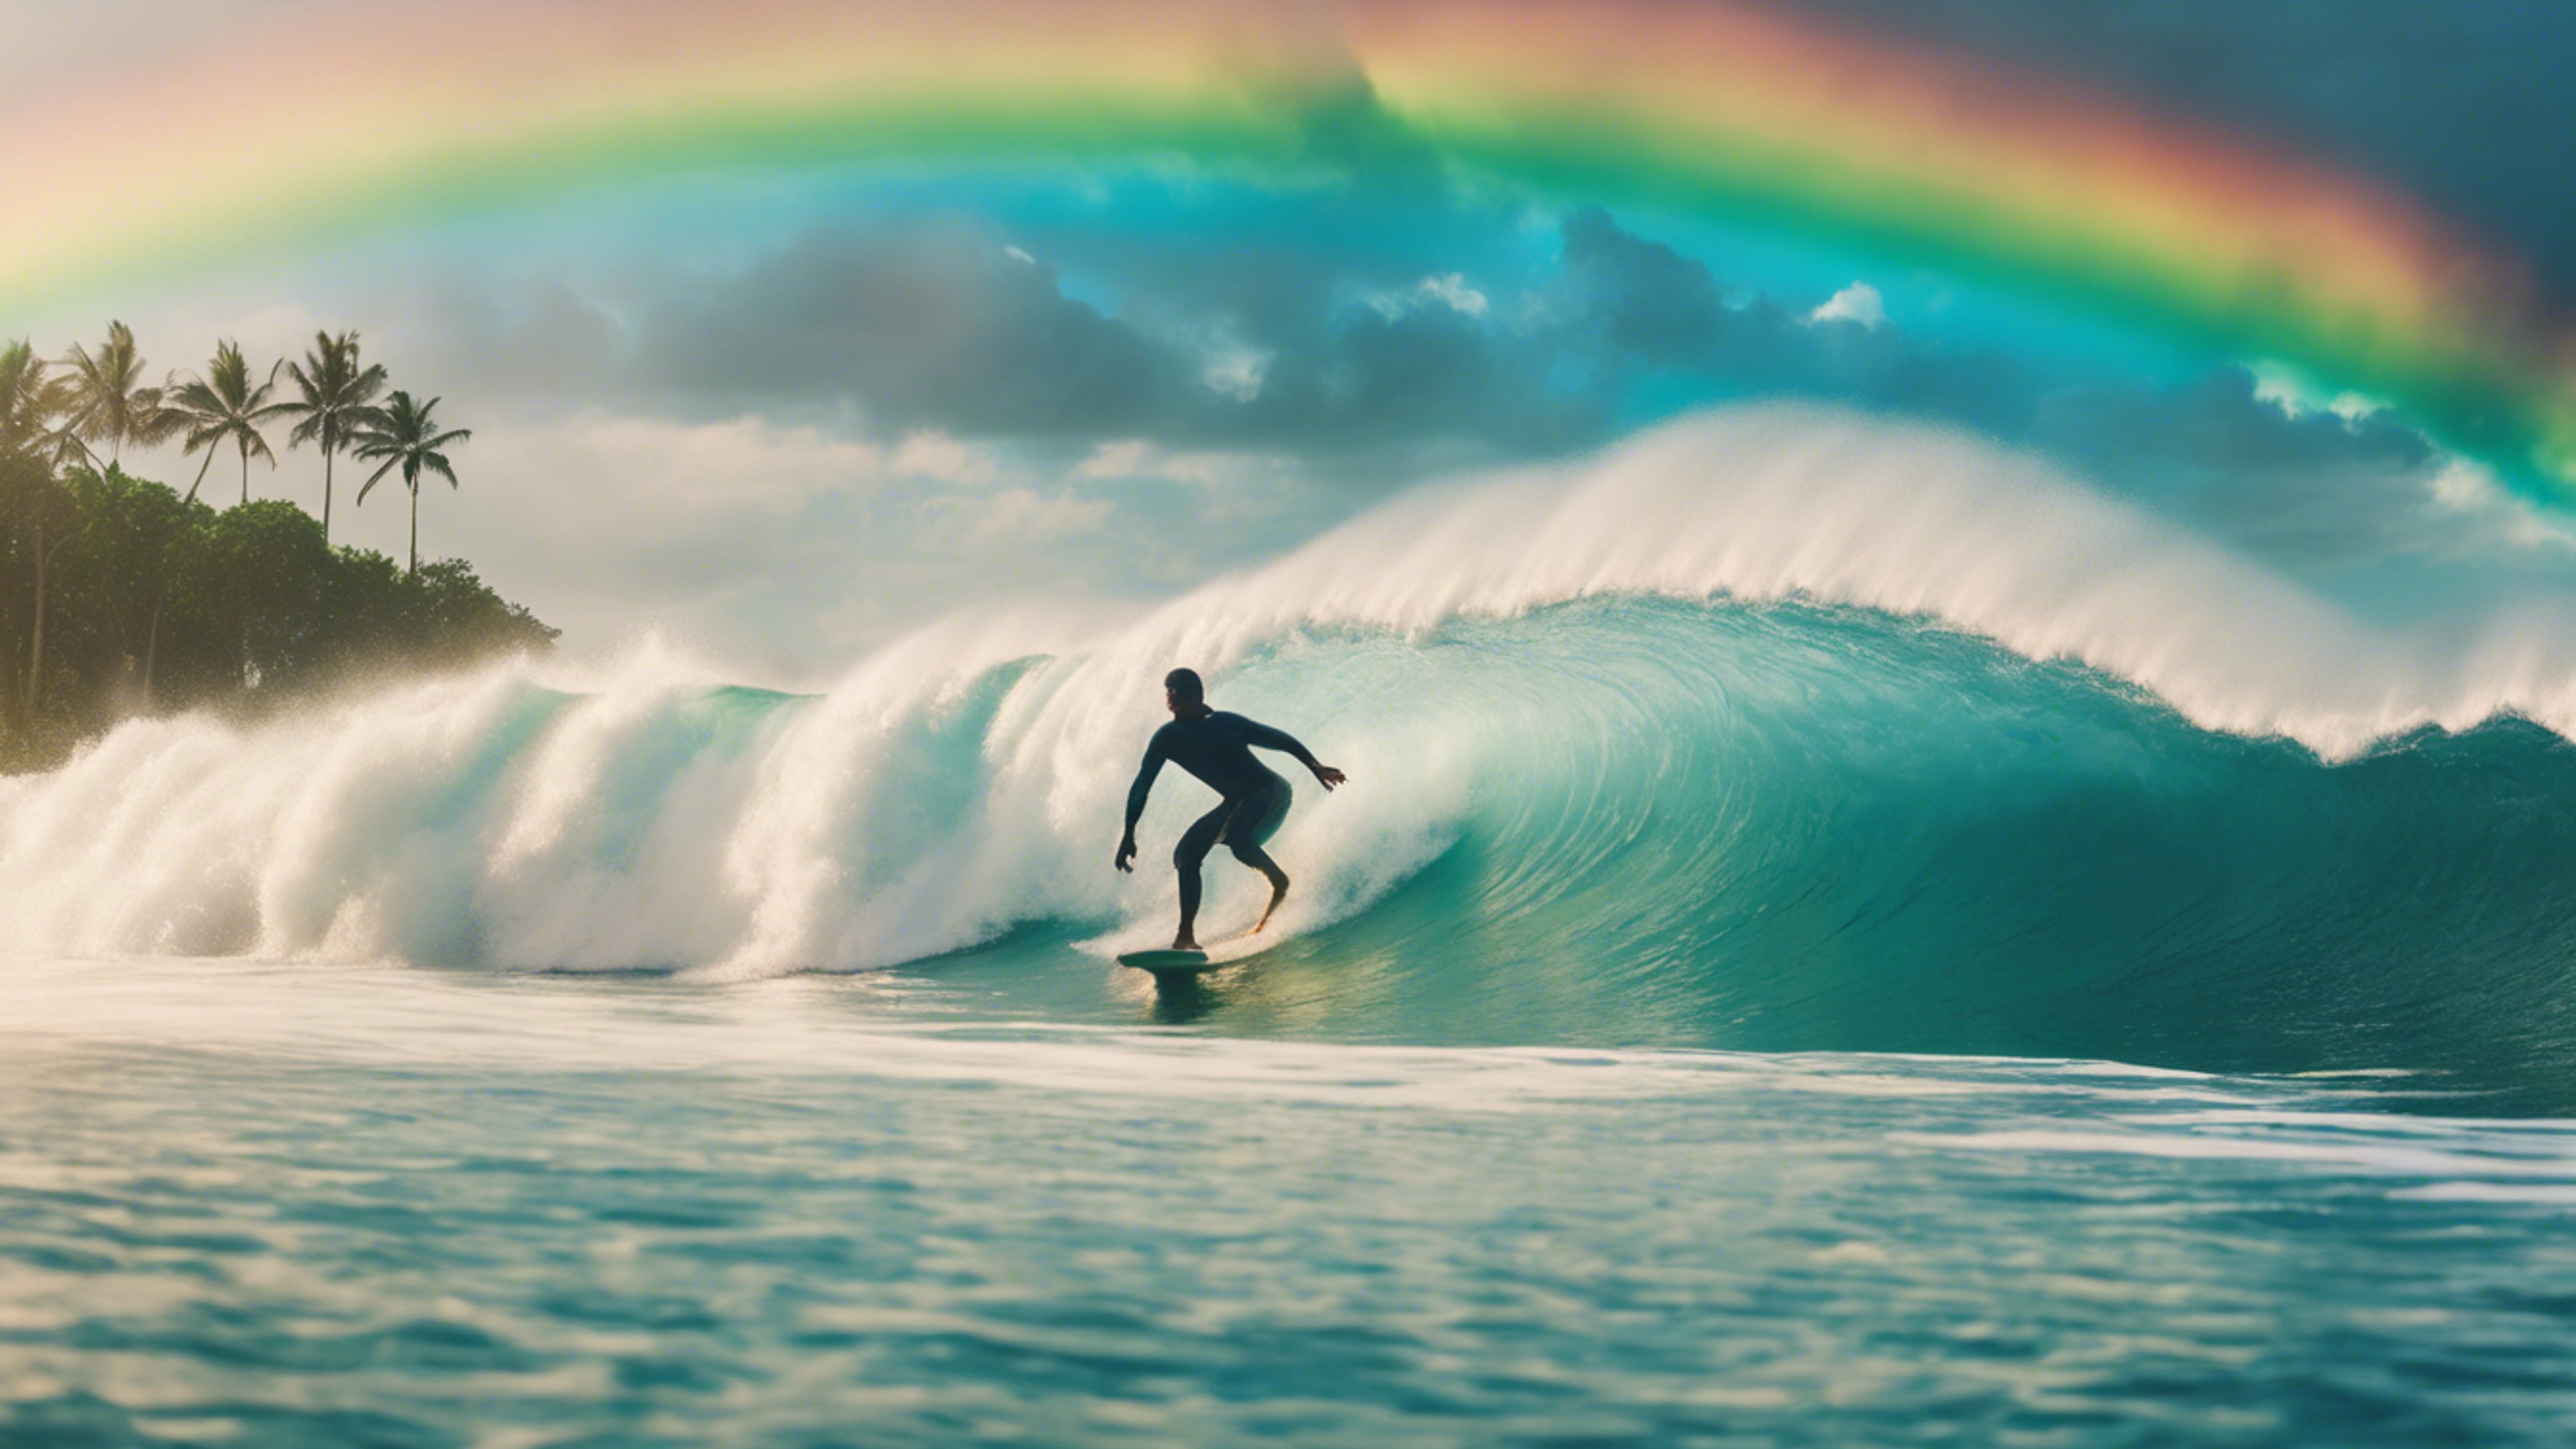 A spontaneous man surfing on a giant wave under a scintillating rainbow in a tropical ocean. Wallpaper[41deec9b24da40d39c6d]